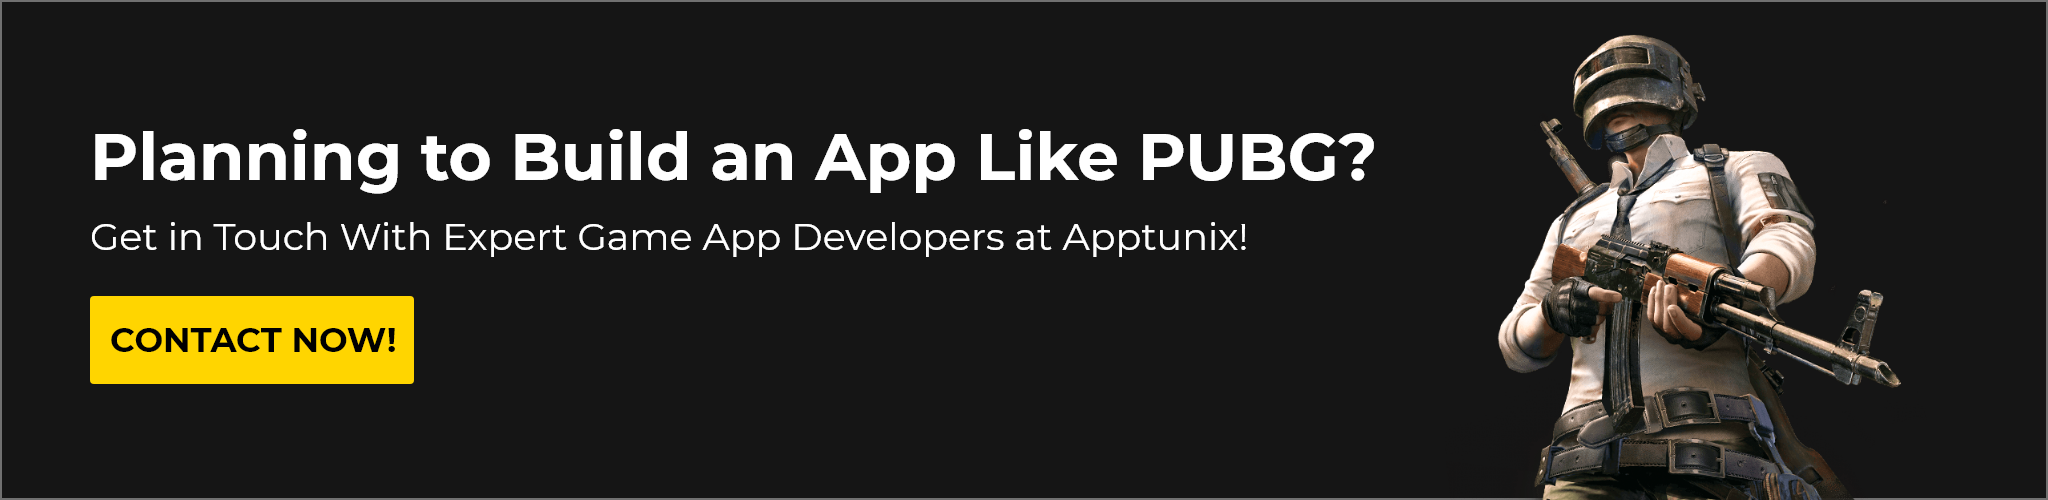 PUBG like app development cost